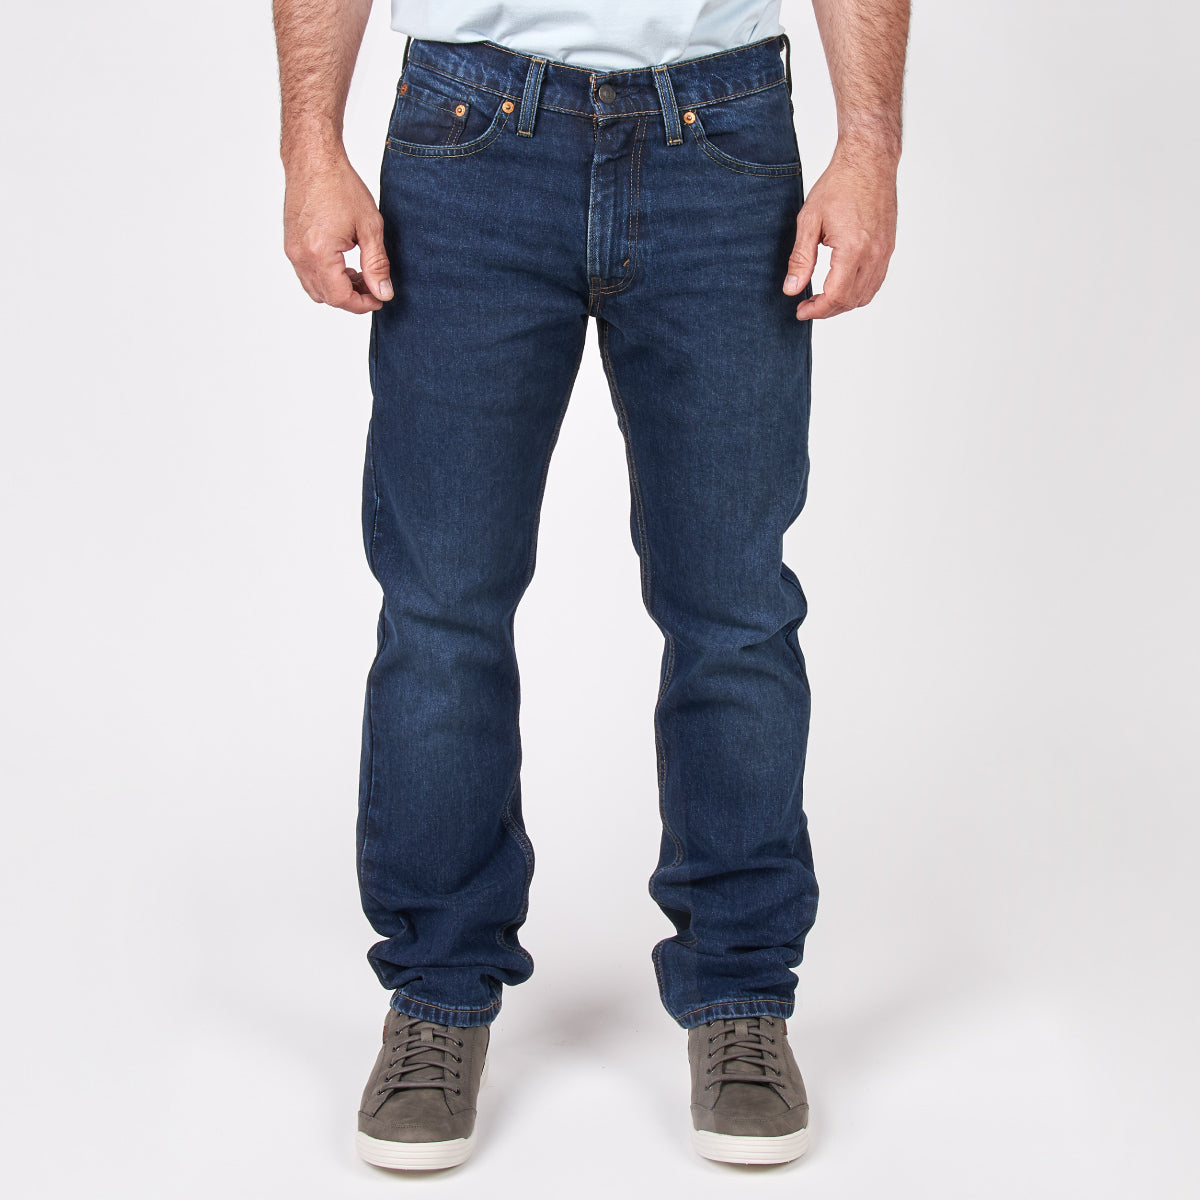 Creatywitty Slim Men Black Jeans - Buy Creatywitty Slim Men Black Jeans  Online at Best Prices in India | Flipkart.com